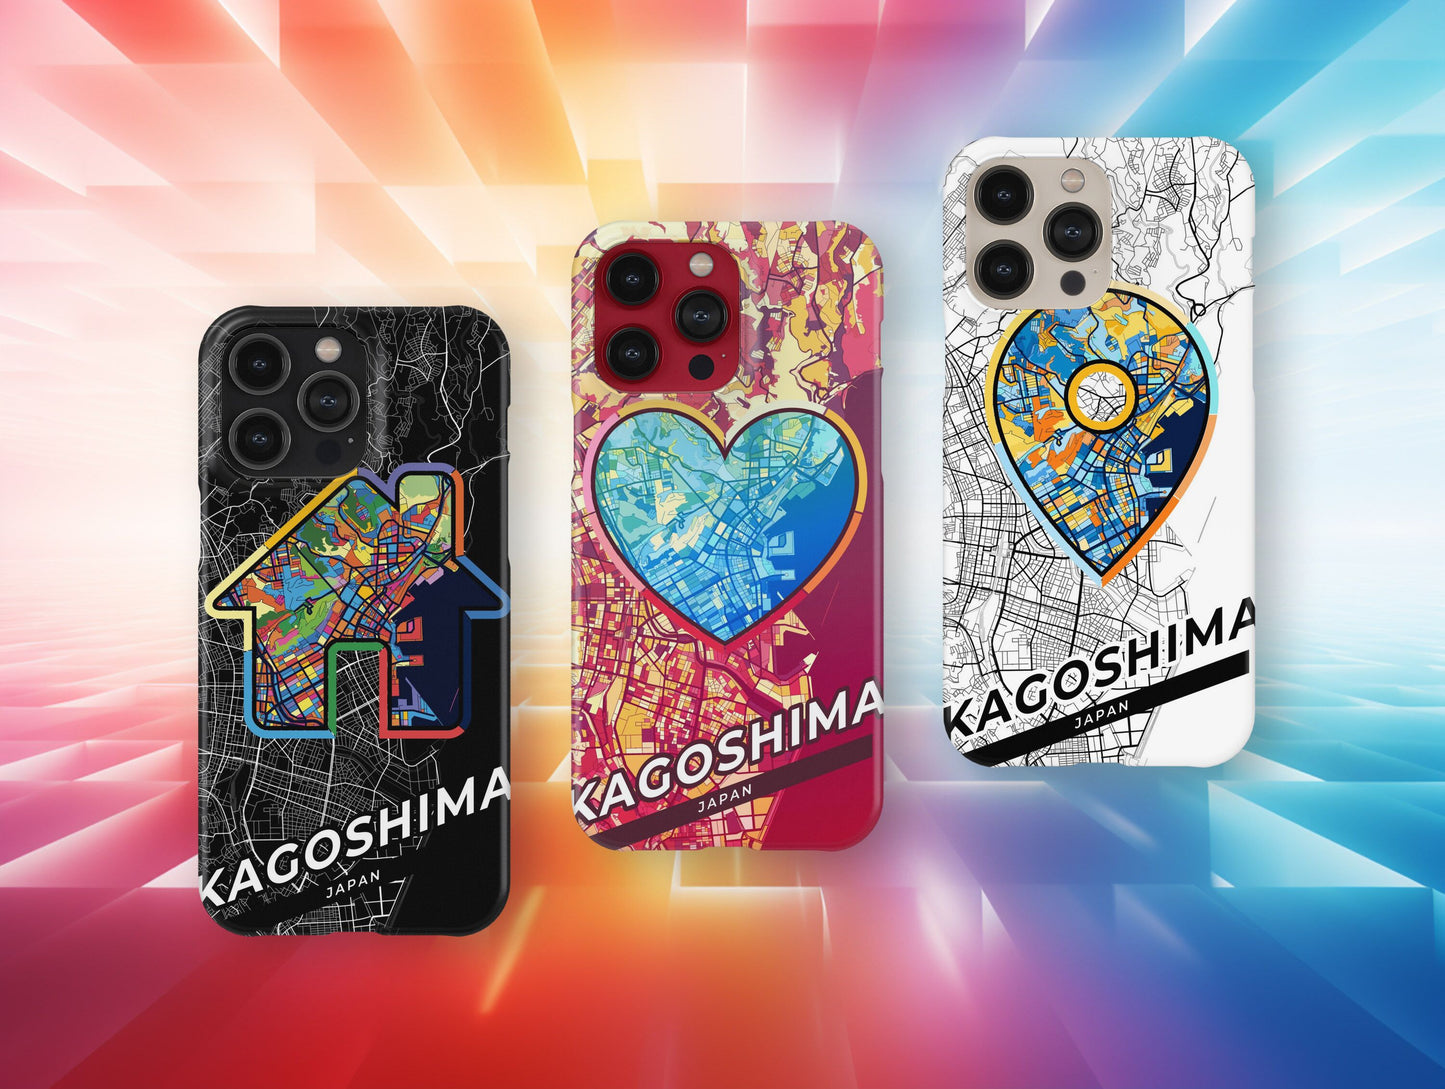 Kagoshima Japan slim phone case with colorful icon. Birthday, wedding or housewarming gift. Couple match cases.